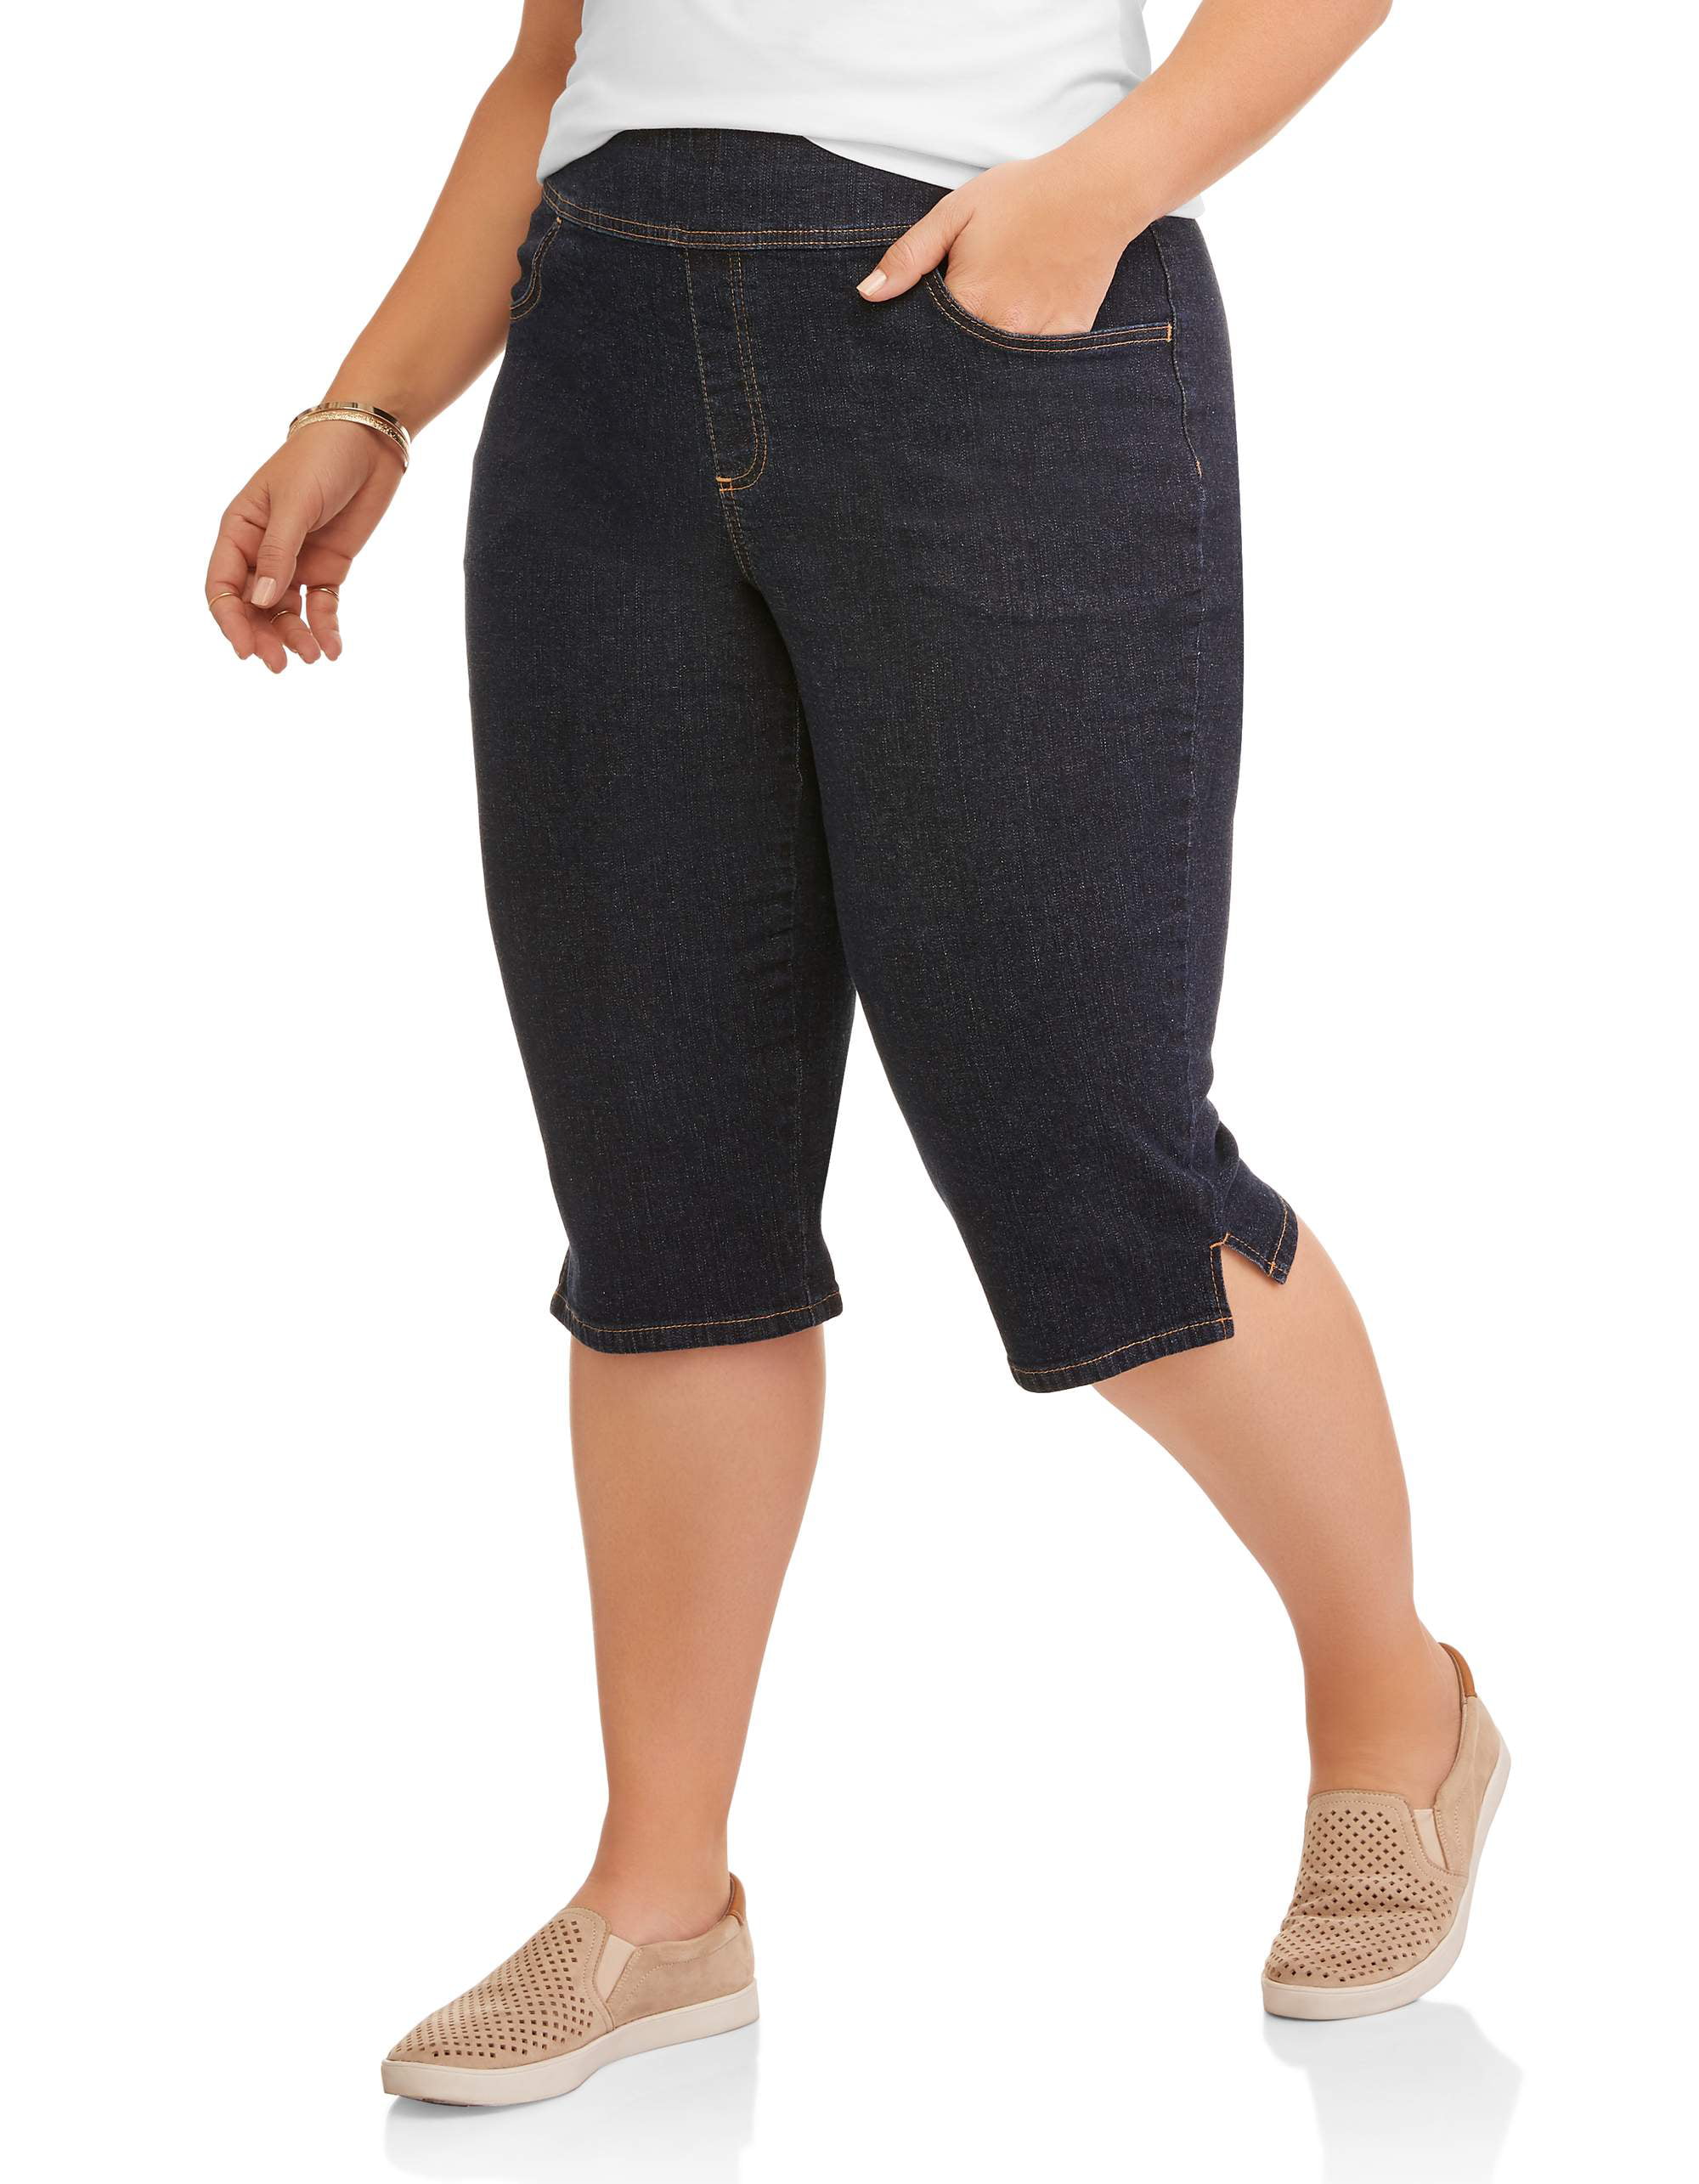 Terra & Sky Women's Plus Size Pull On Curvy Capri Pants Dark Wash Size 4X